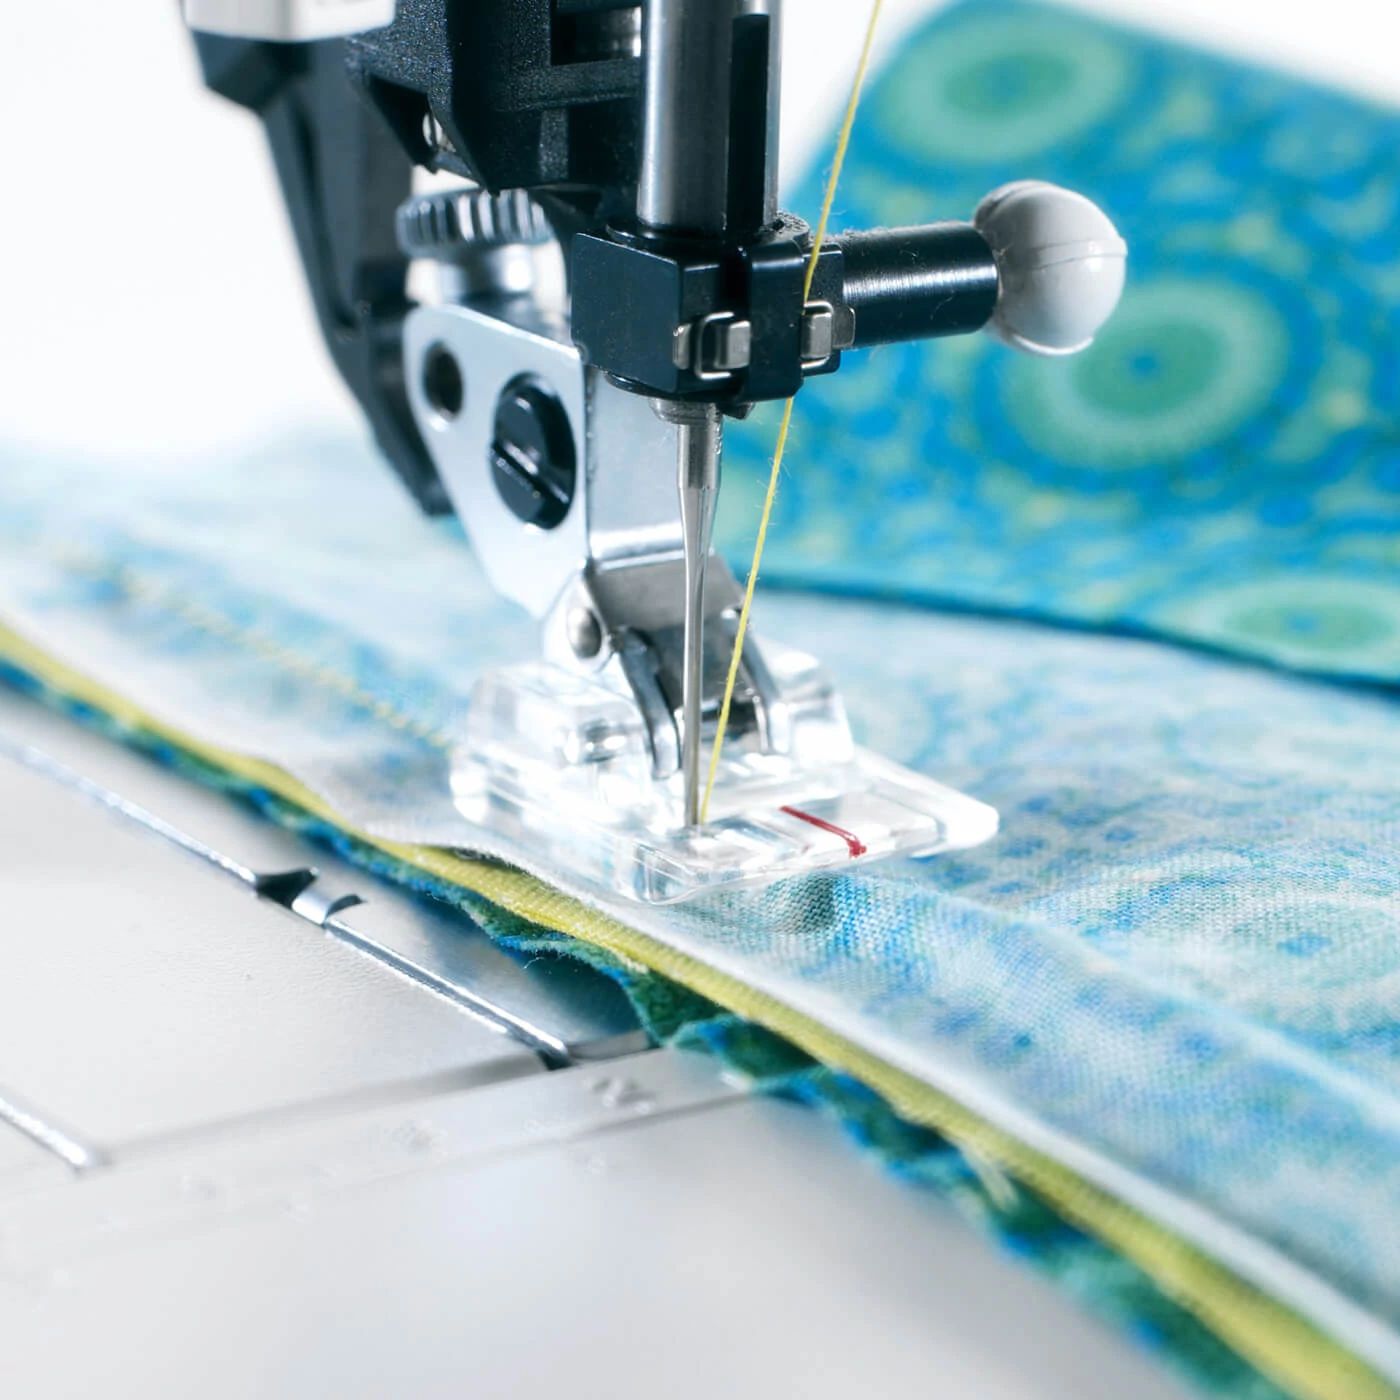 Pfaff Passport 2.0 Compact Sewing Machine – Quality Sewing & Vacuum